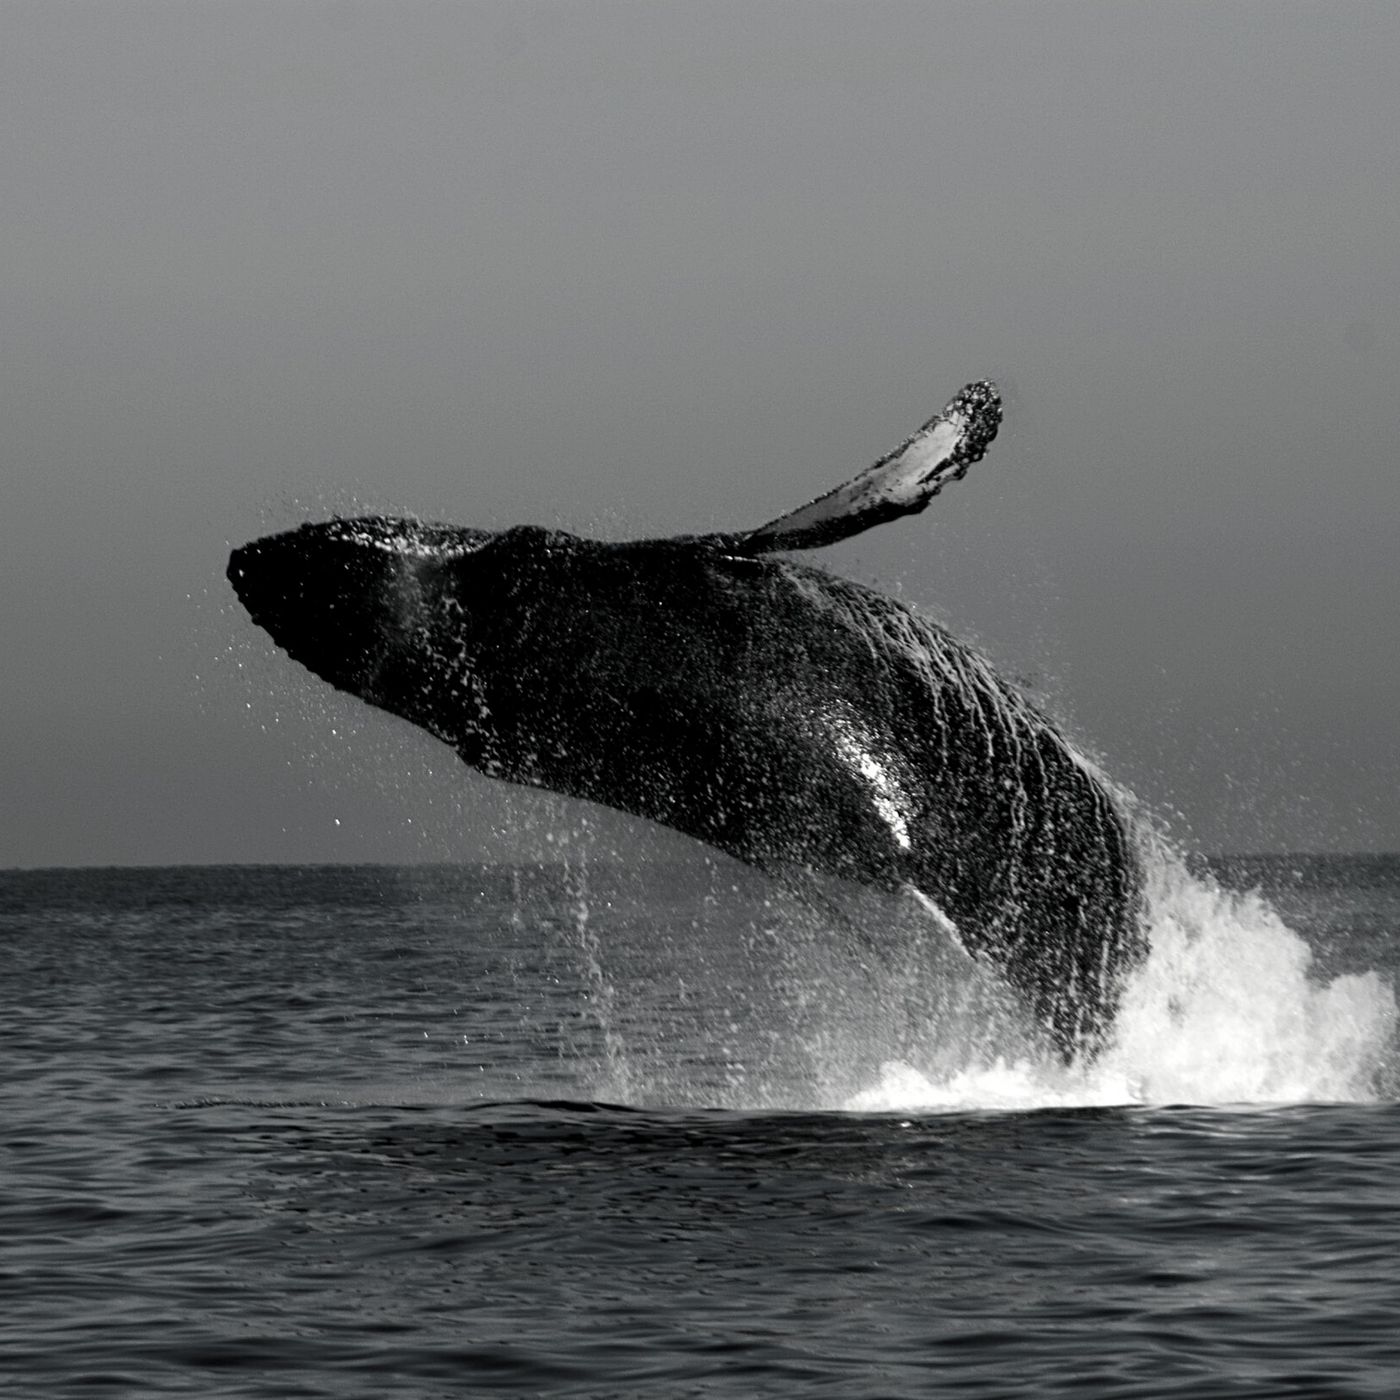 Alla Scoperta del Whale Watching! - Conservazione  (w/ A. Somà & G. Motta | Autore) S.1